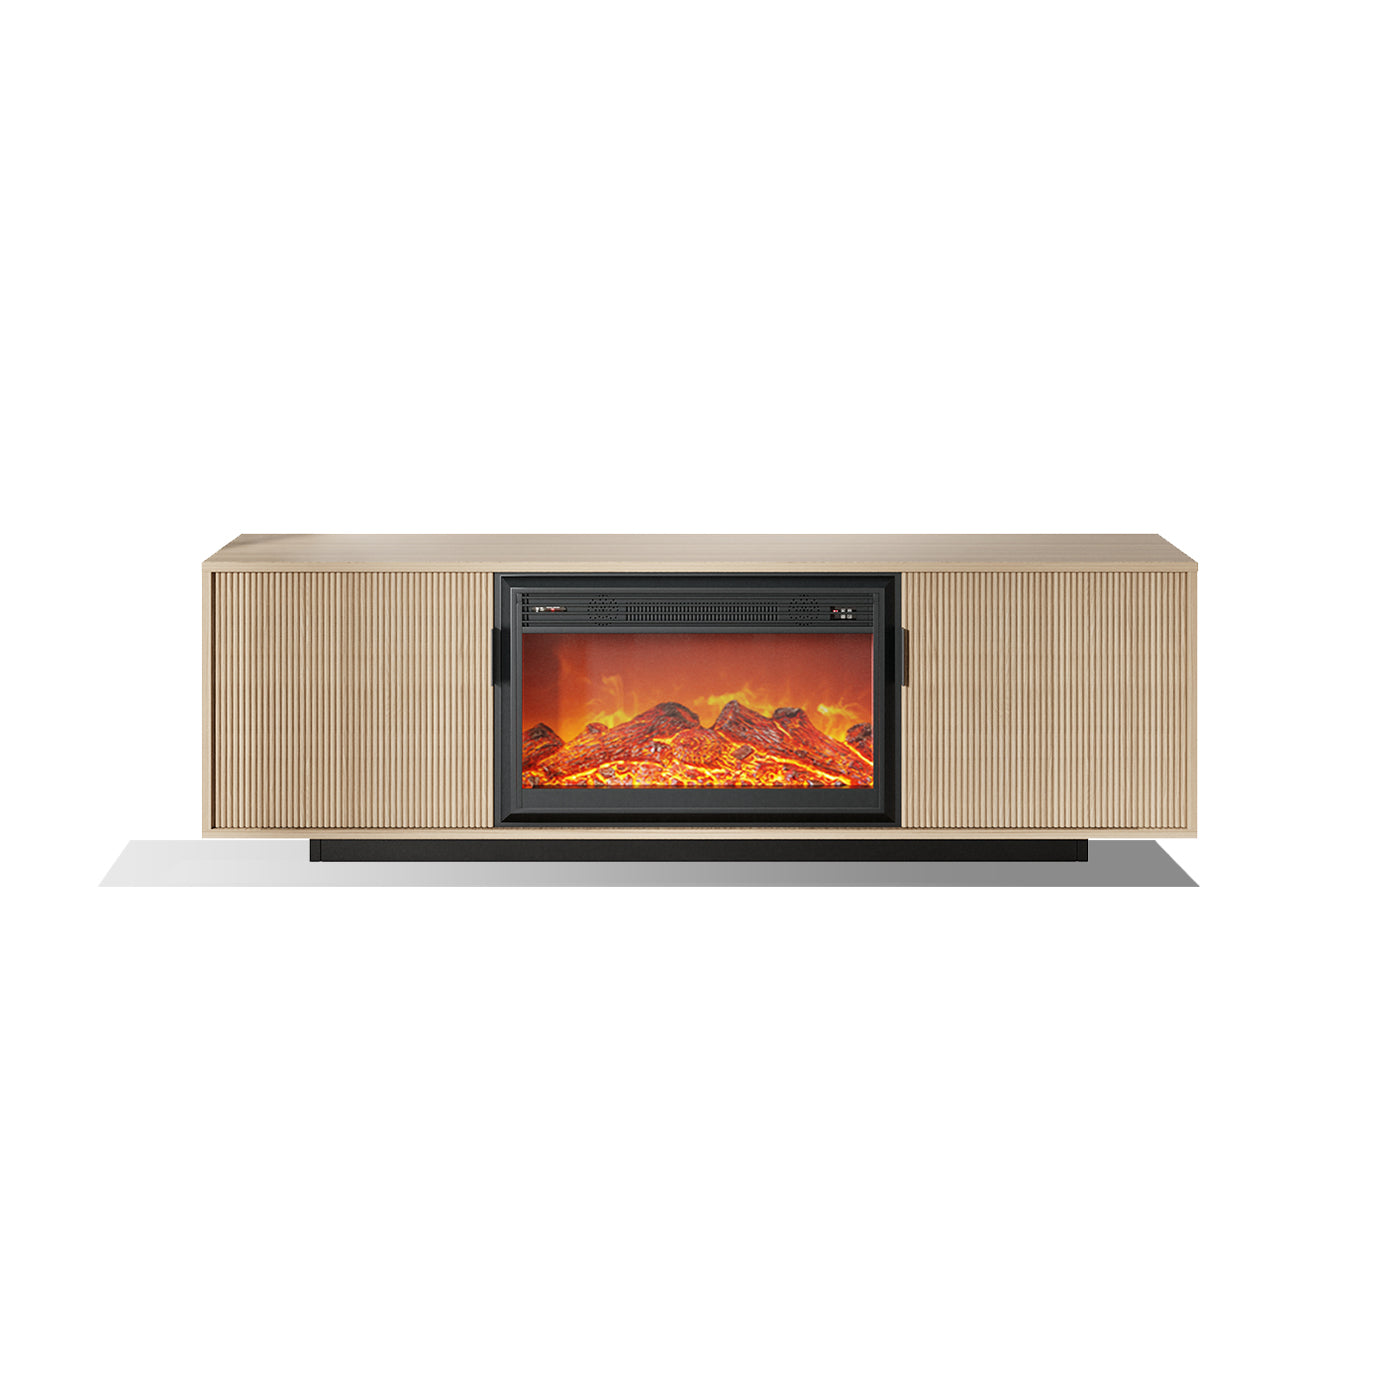 70.8in Walnut Veneer Simulated Heating Fireplace